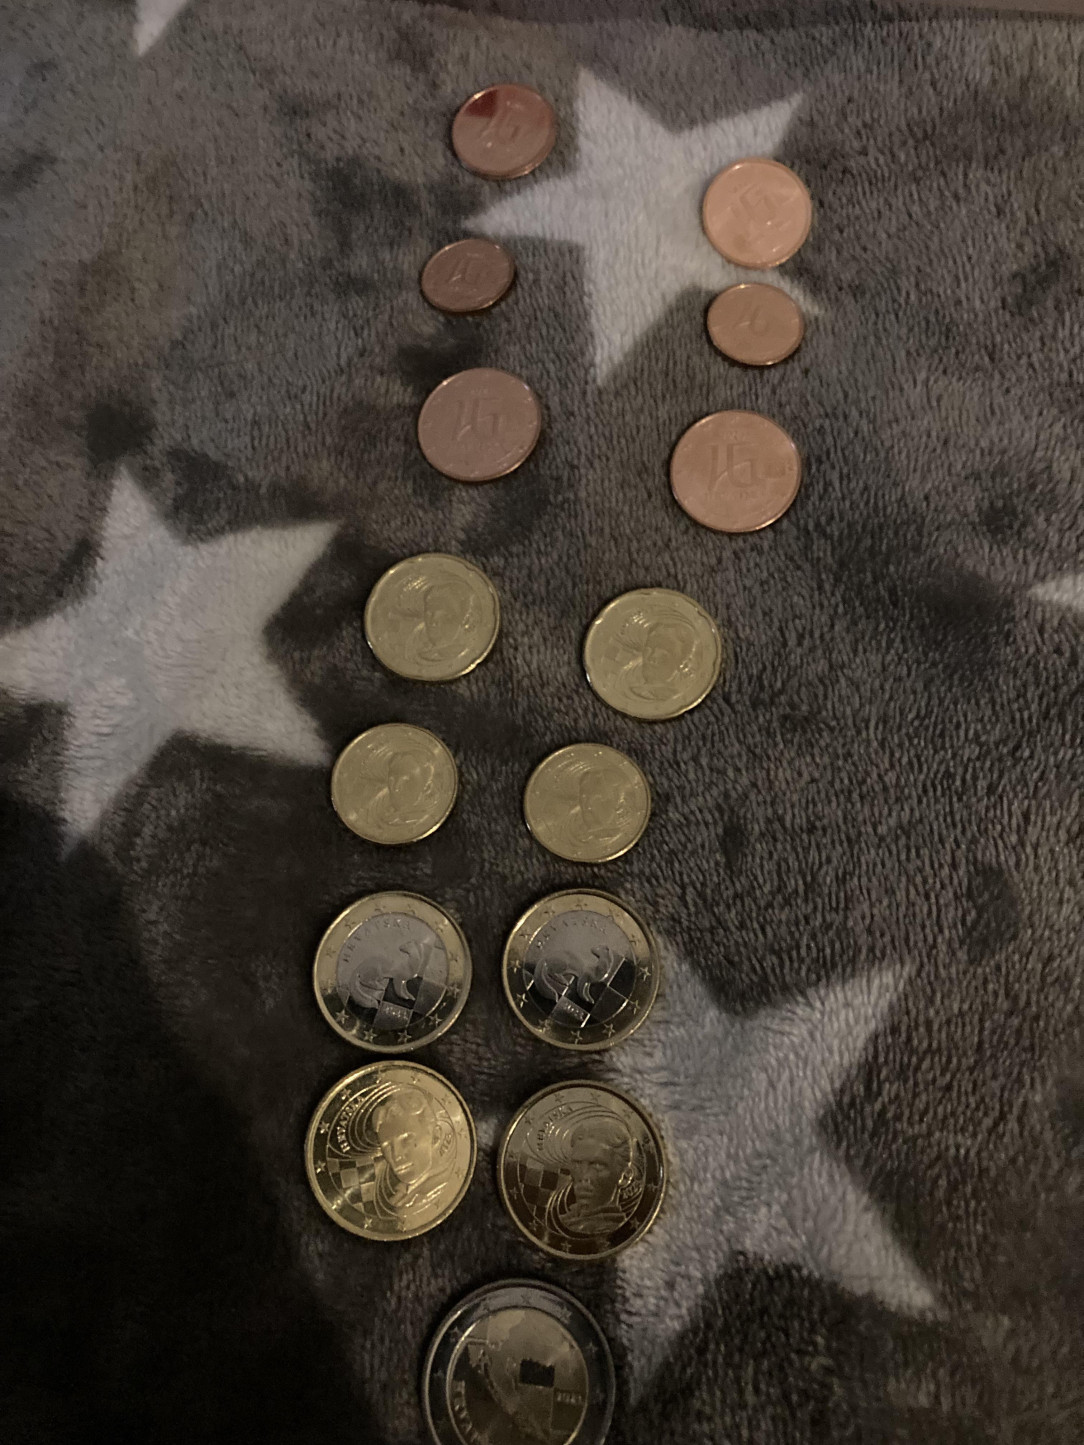 Croatian coins